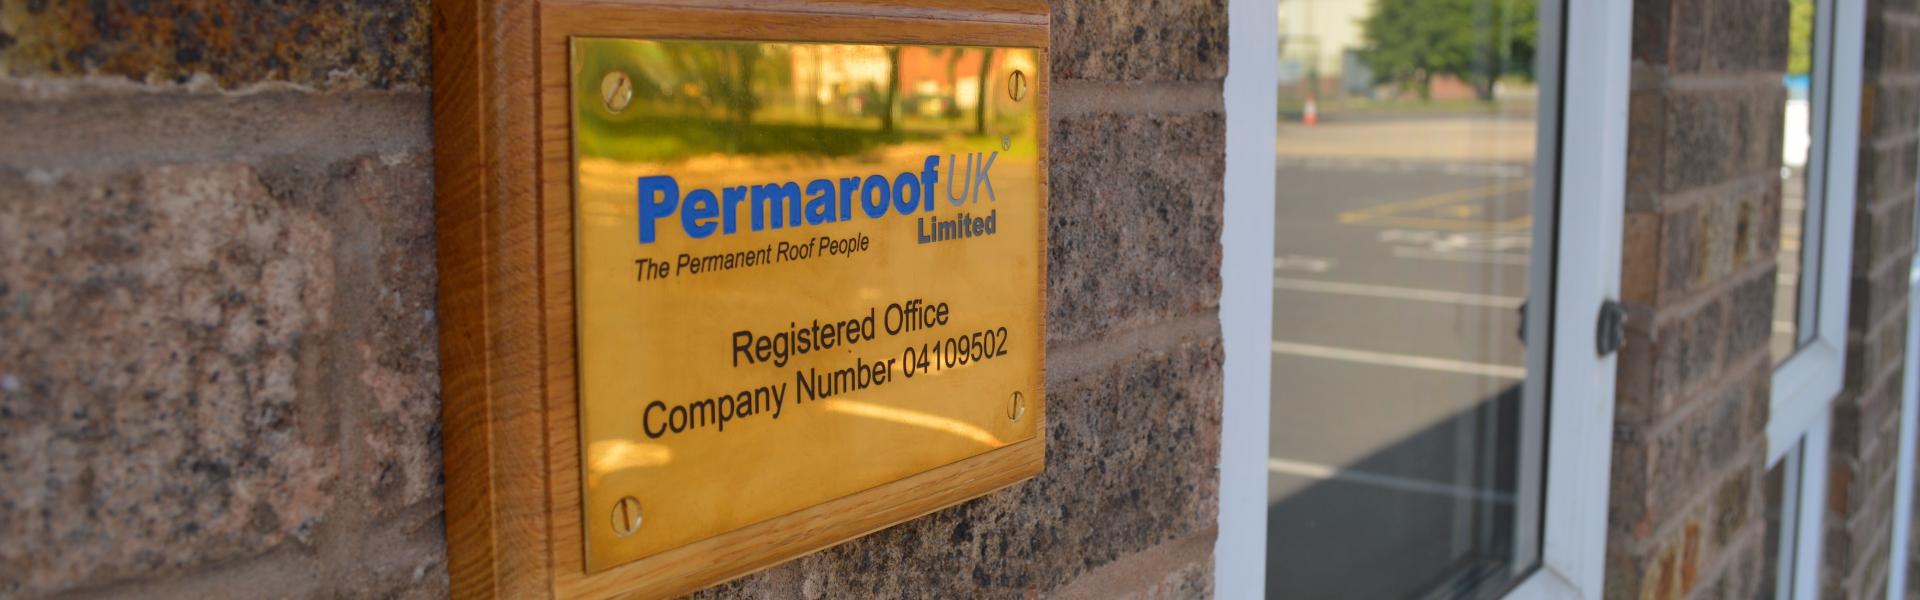 Permaroof UK - The Permanent Roof People